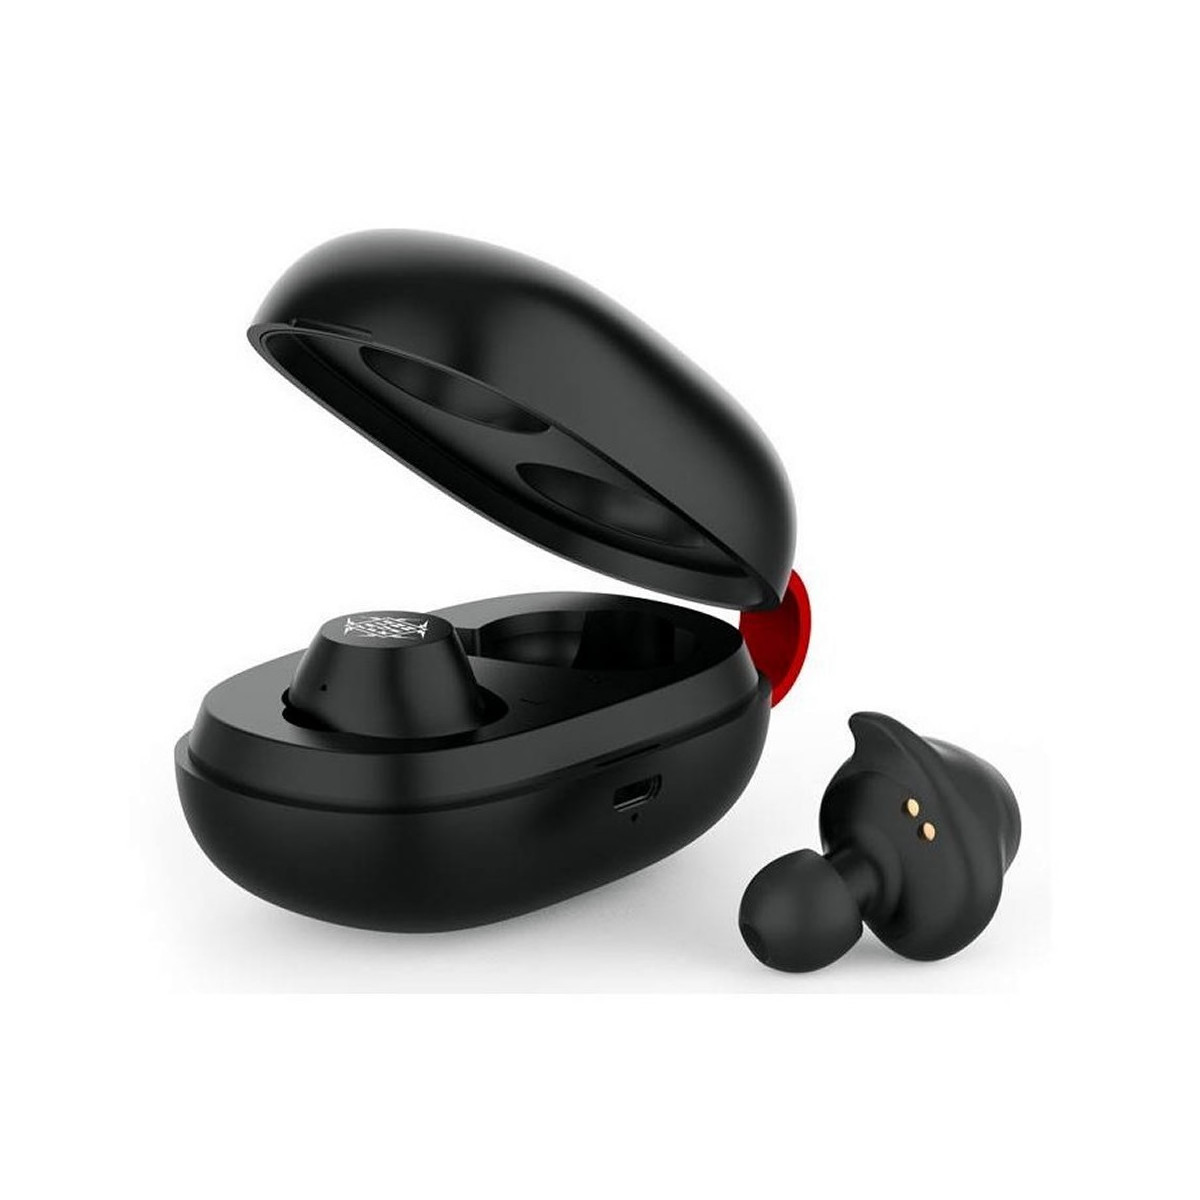 Auriculares Bluetooth Telefunken BTH-100 4Hs 250mAh TWS In Ear